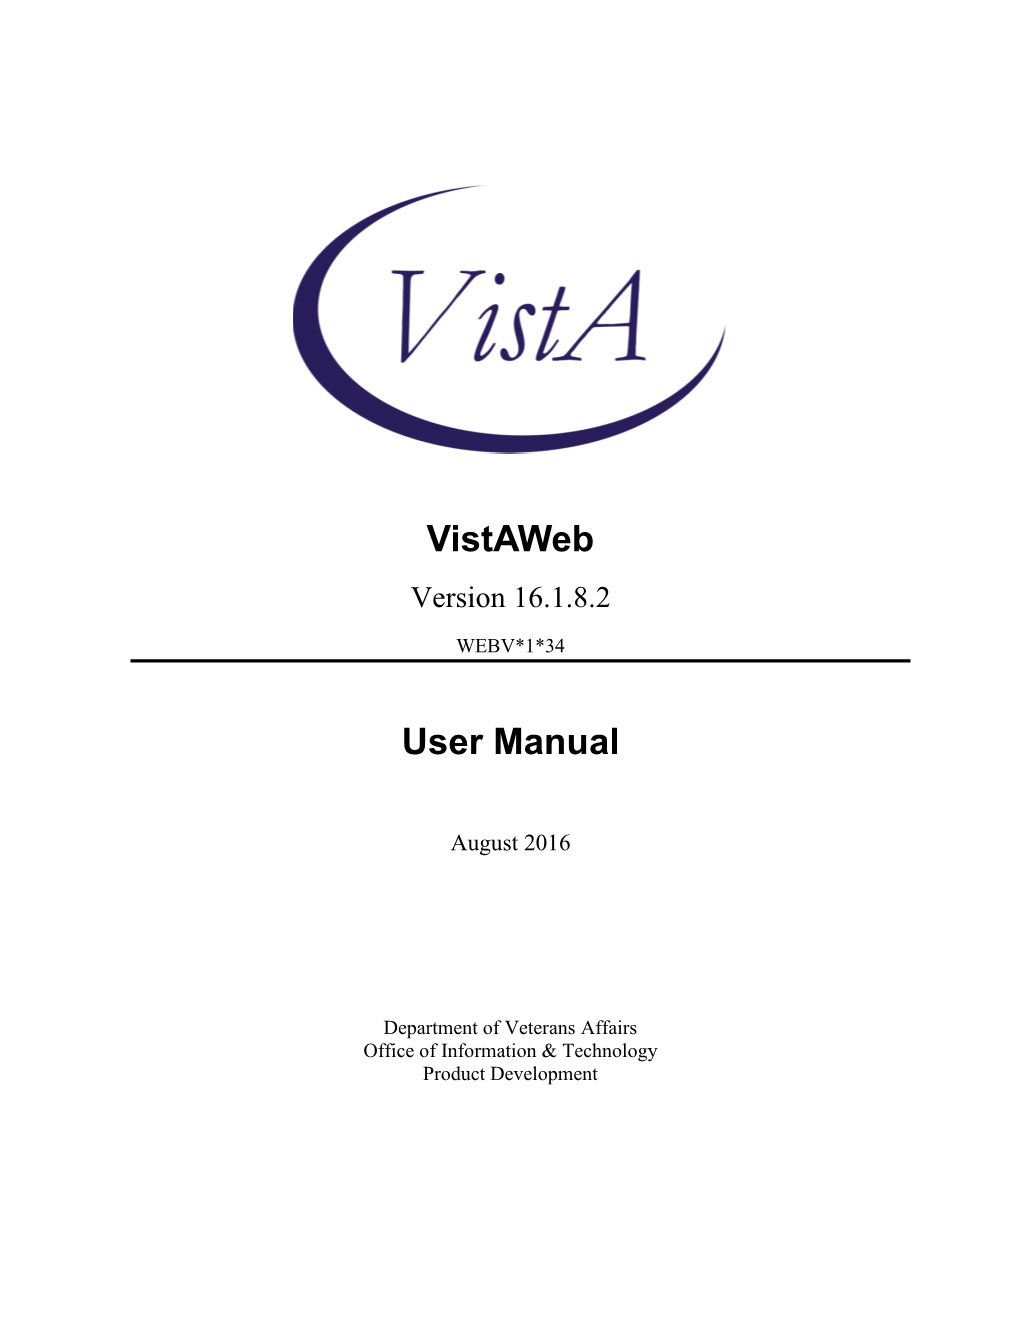 Department of Veterans Affairs Vistaweb Version 7 User Manual